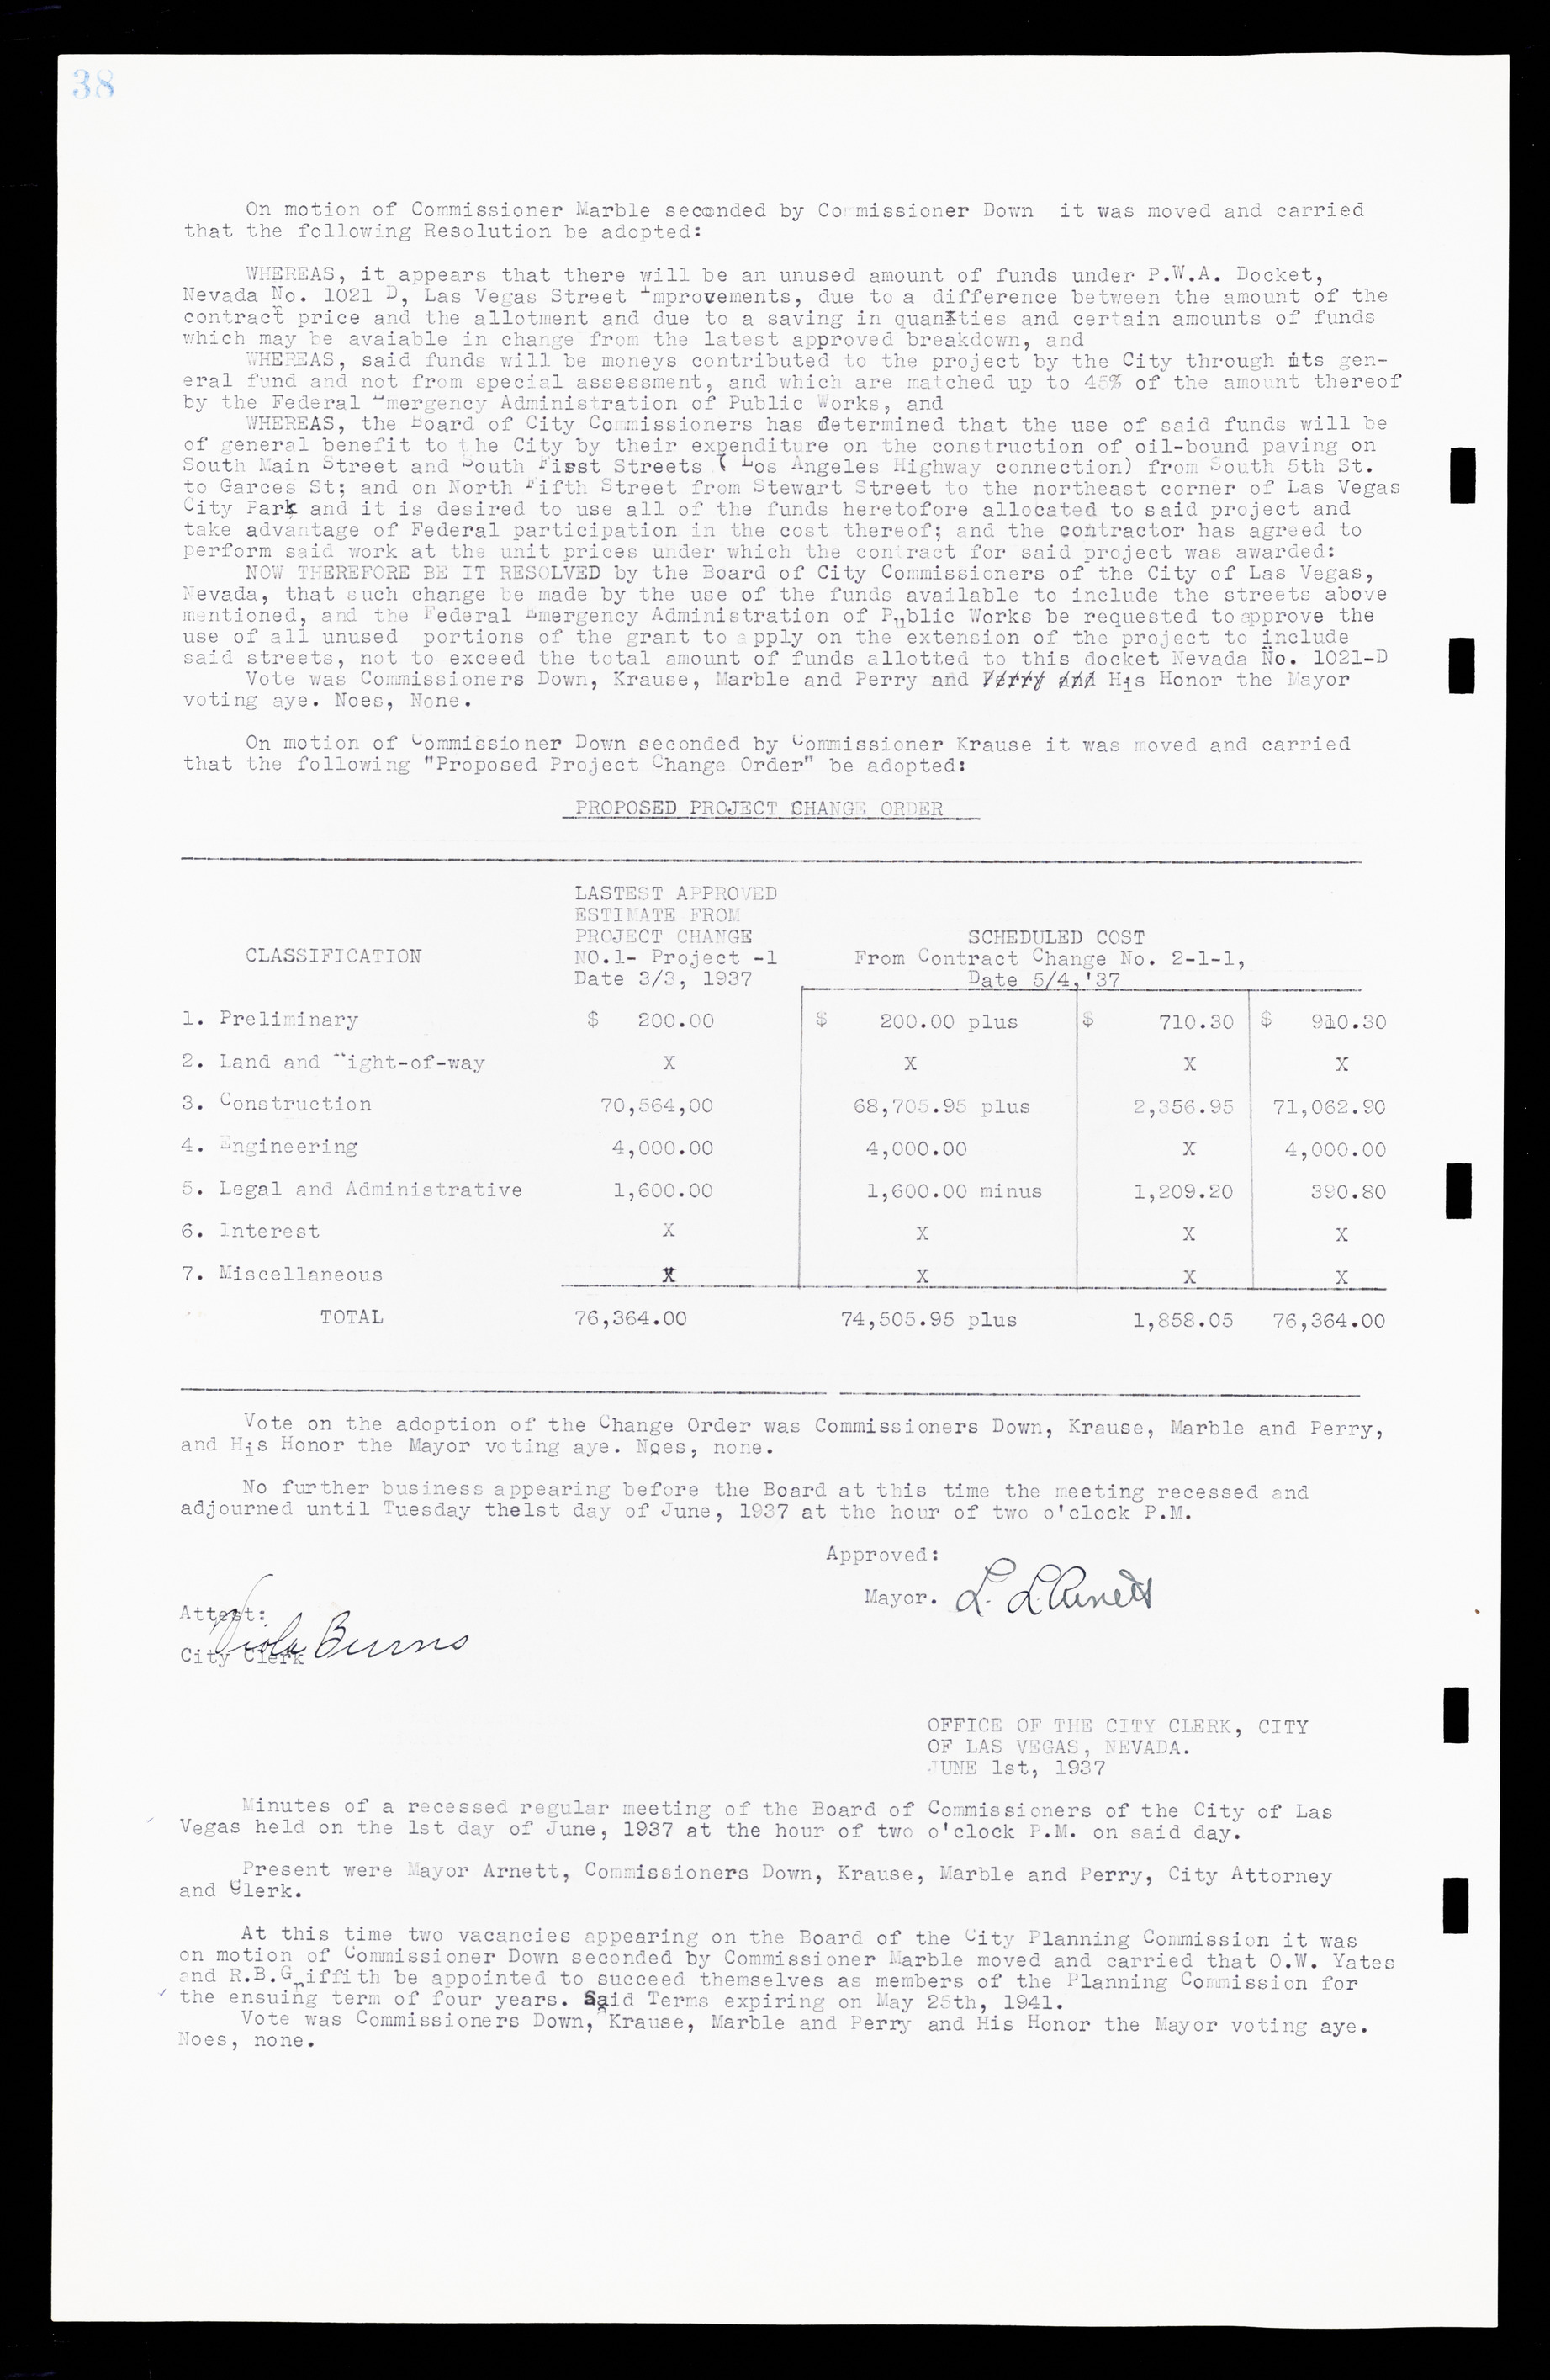 Las Vegas City Commission Minutes, February 17, 1937 to August 4, 1942, lvc000004-44